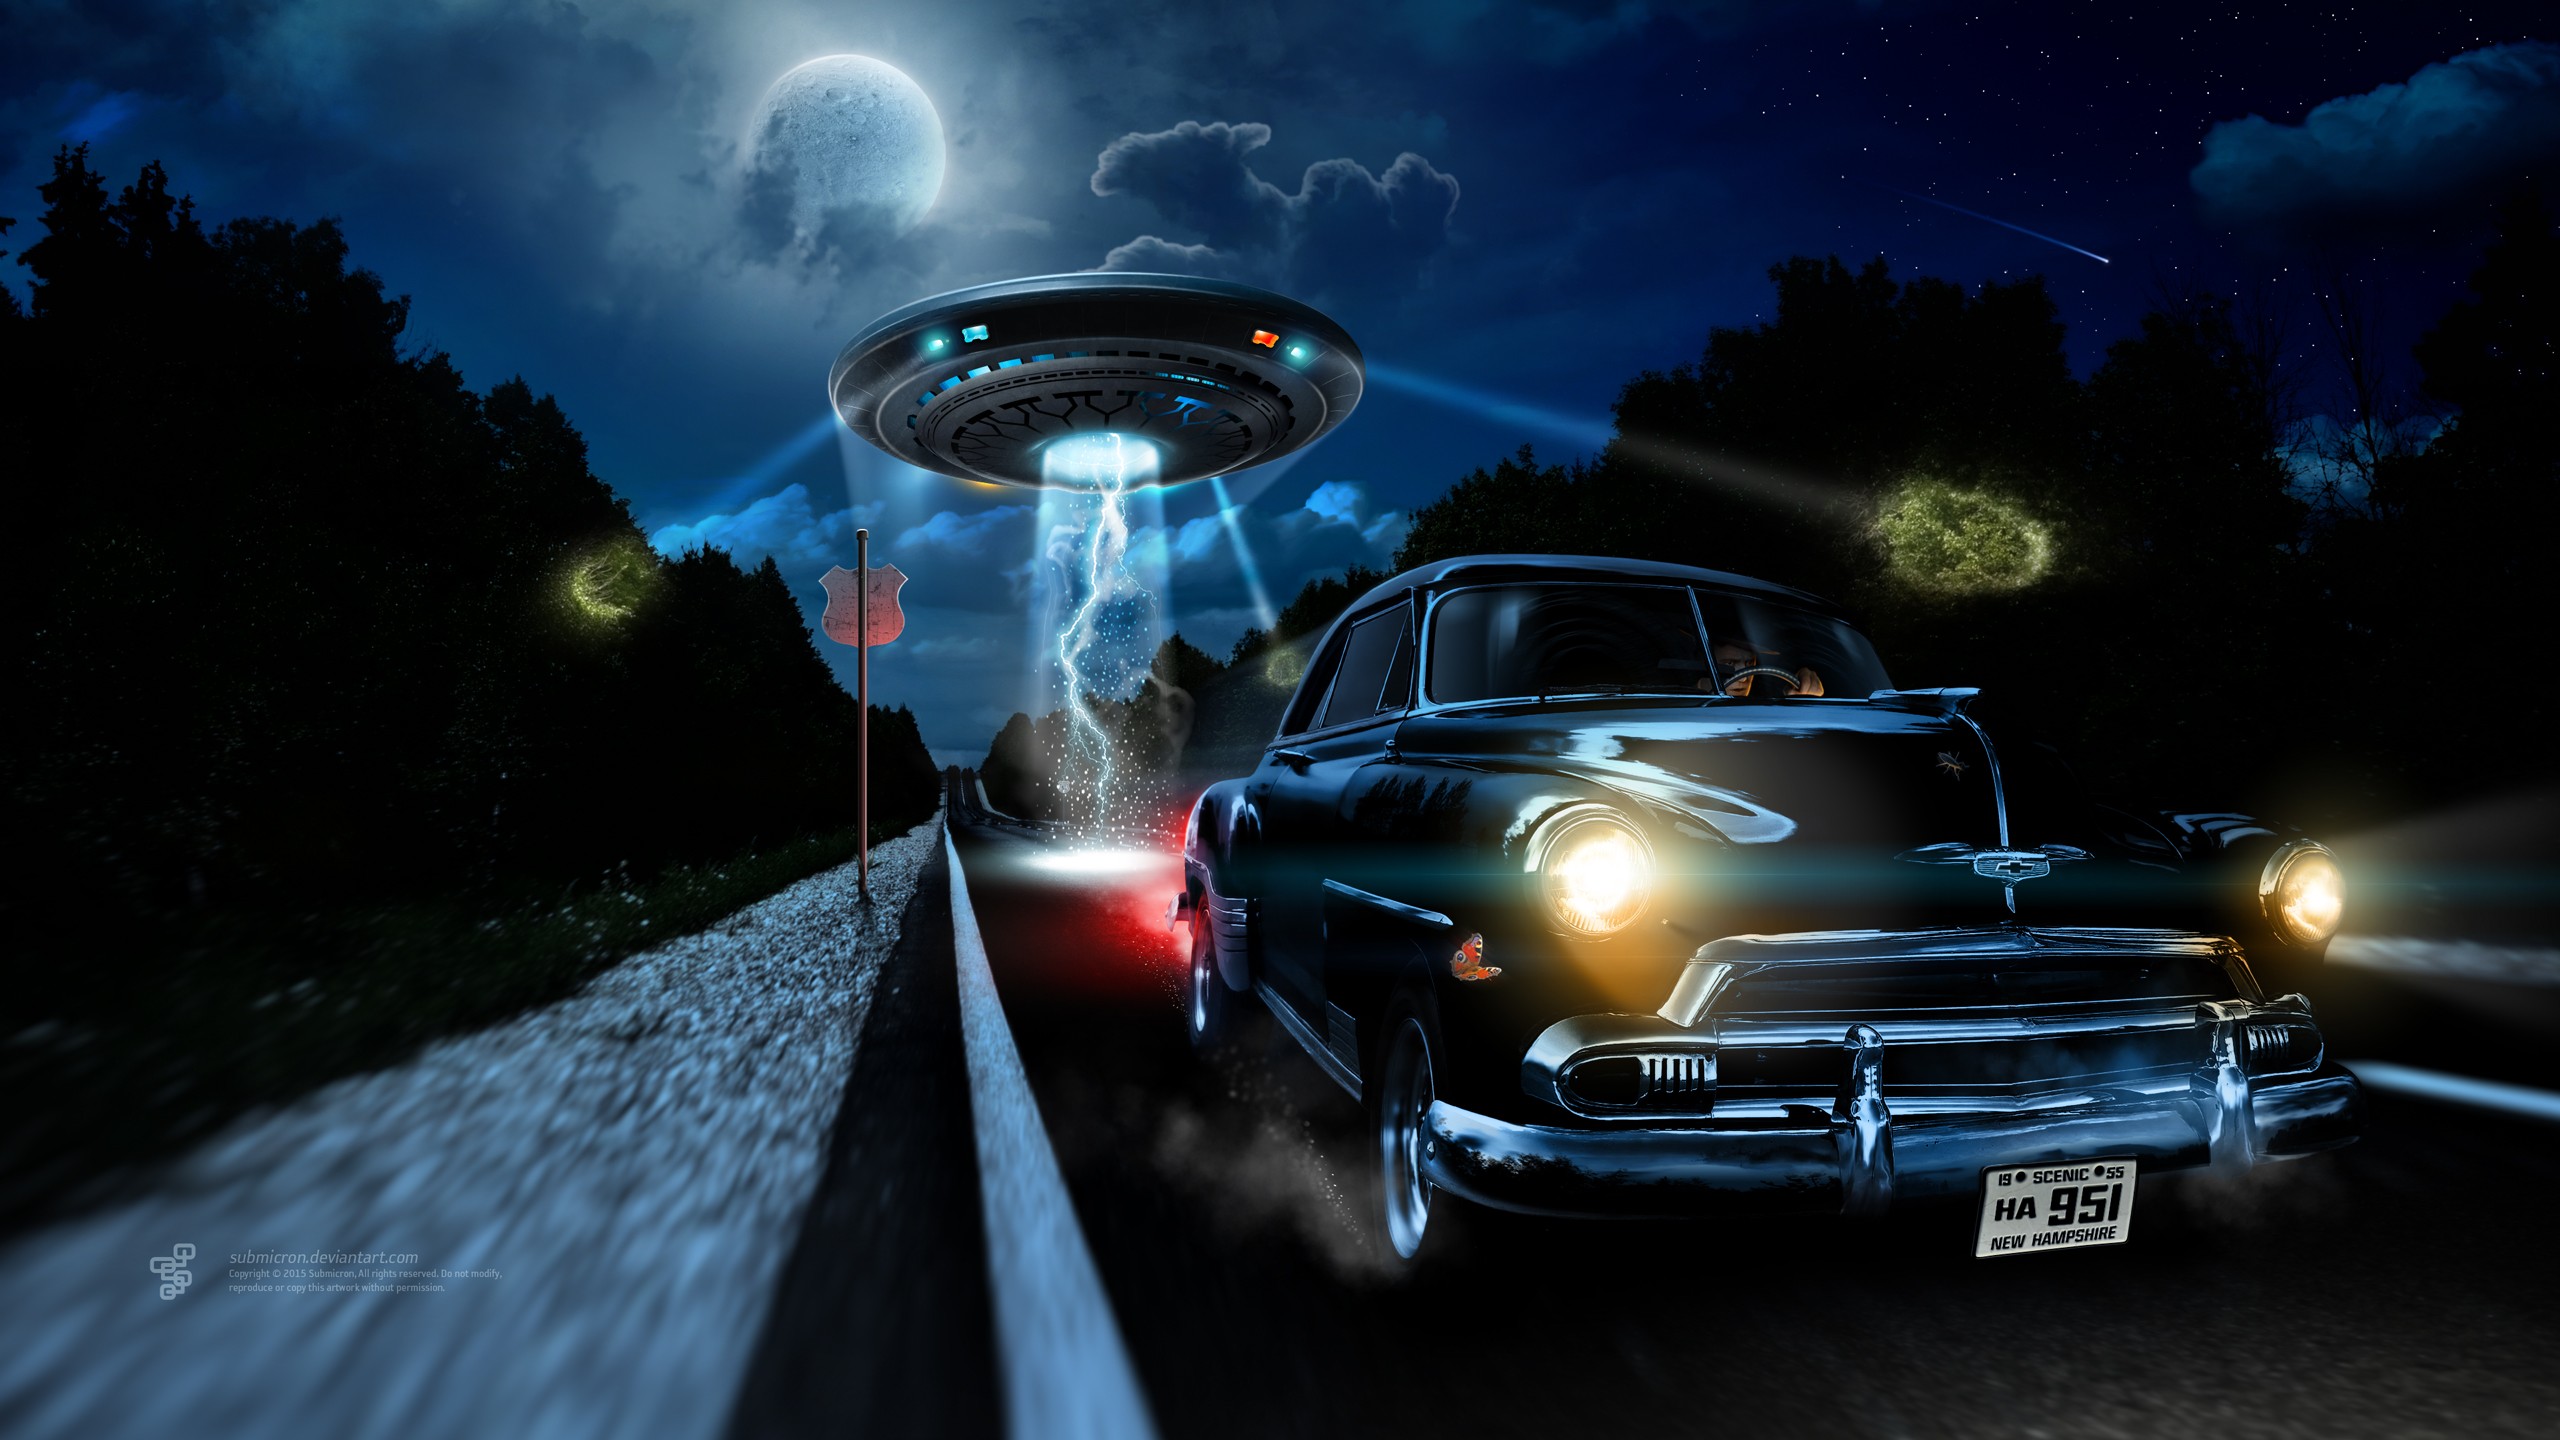 vehicle, Car, Chevrolet, Night, UFO, Digital Art, Fantasy Art, Lights, Road, Aliens, Trees, Forest, Clouds, Stars, Planet, Lightning, Road Sign Wallpaper